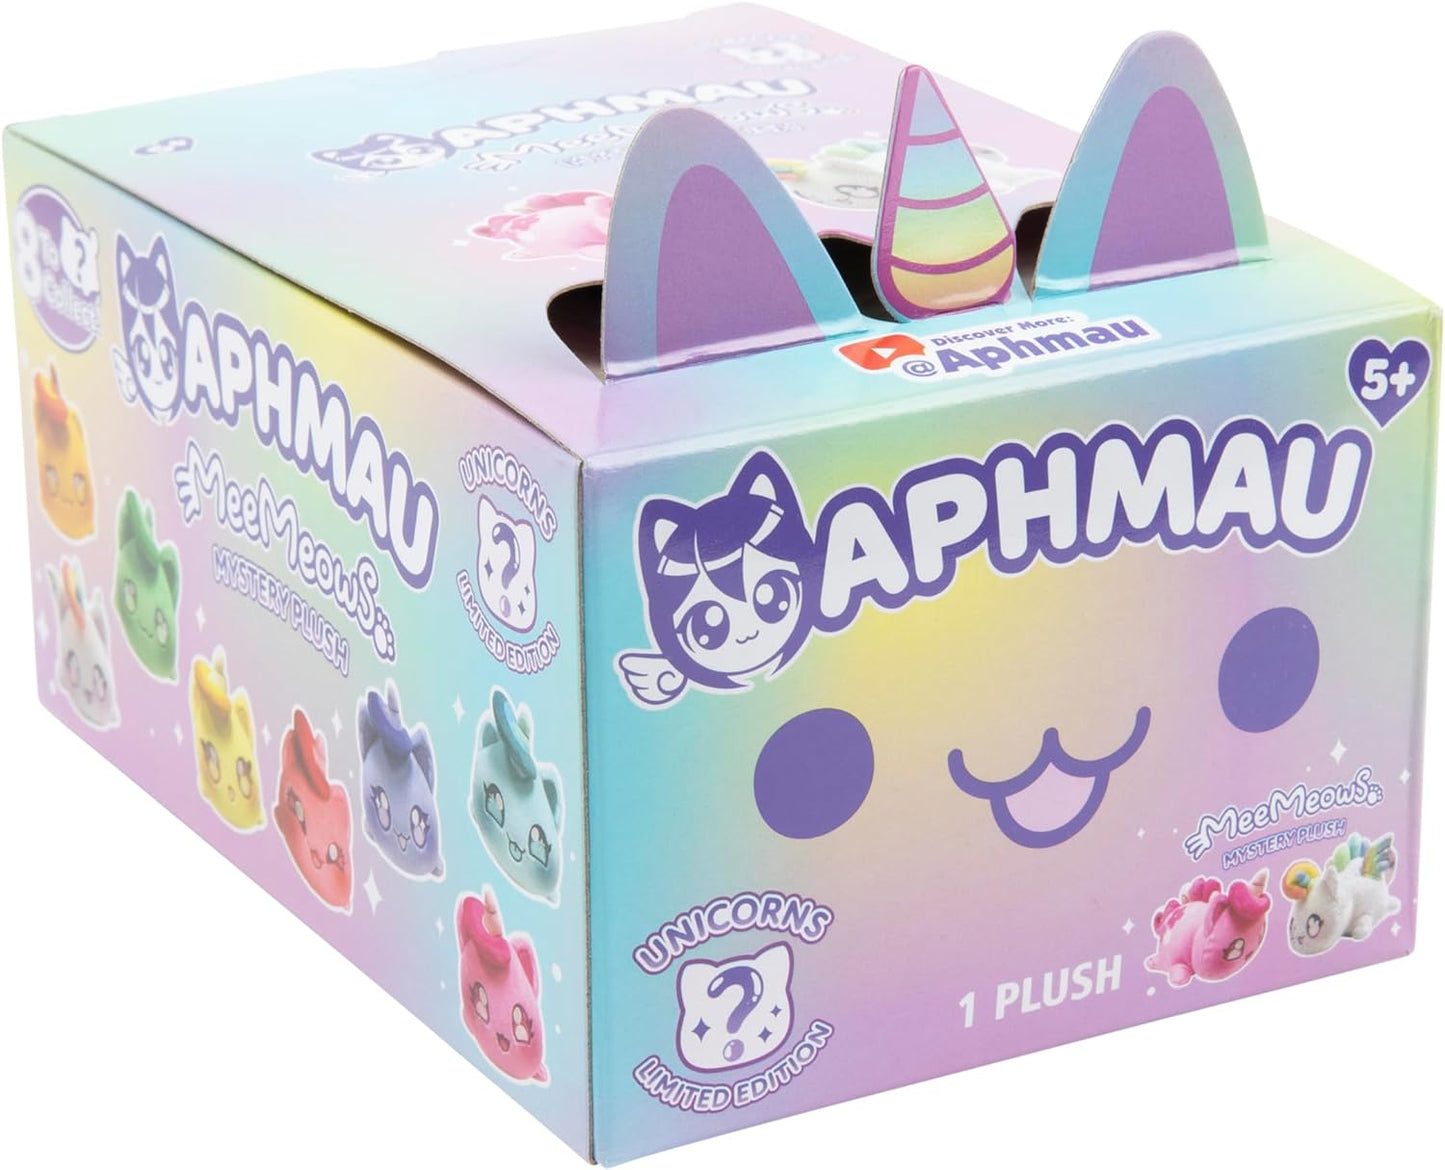 PINK UNICORN CAT - MeeMeows Limited Edition Aphmau Plush (NEW) RARE Kitty Toy